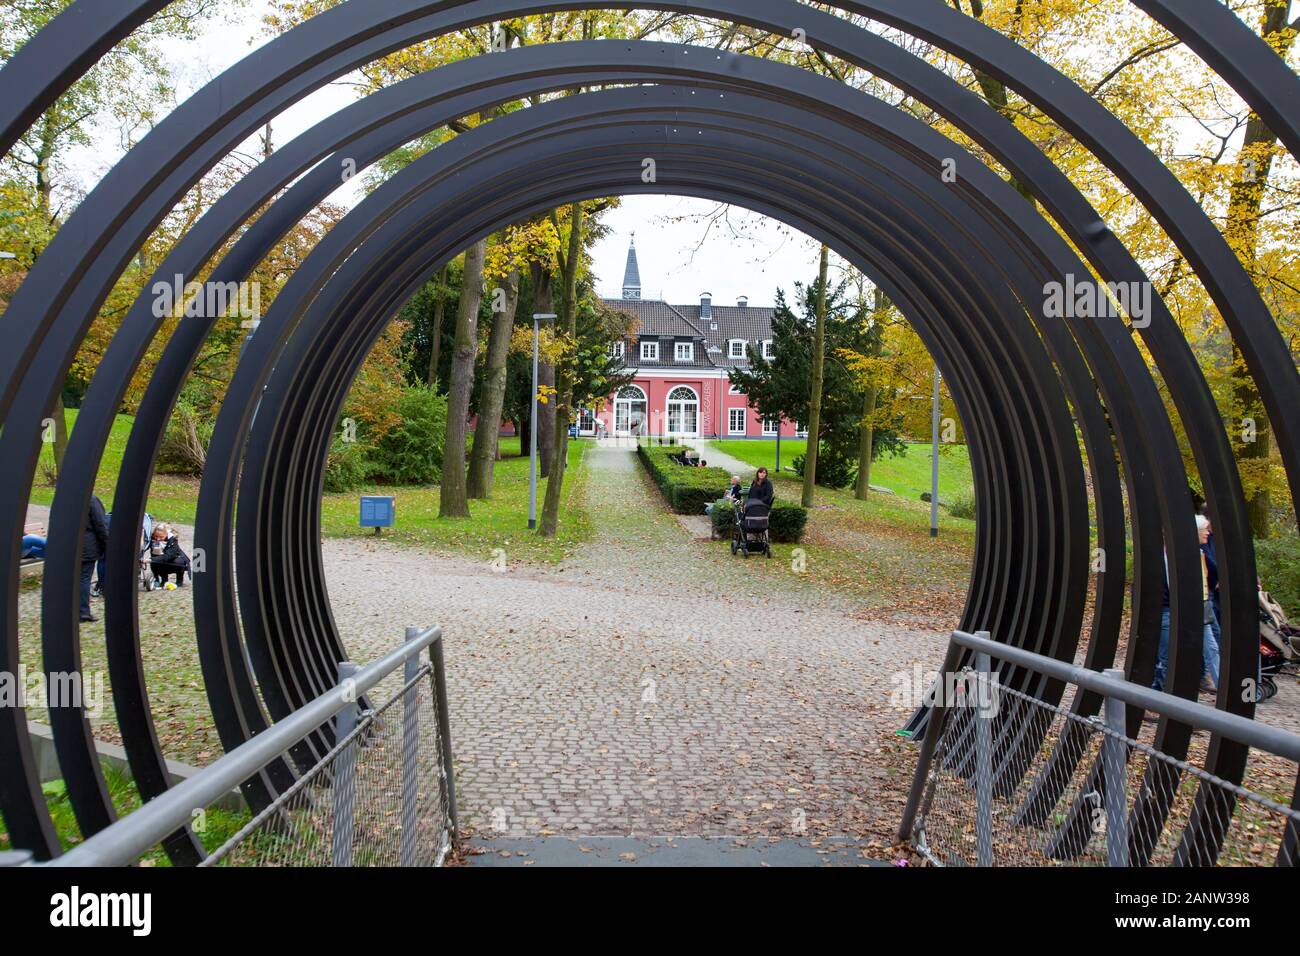 Slinky molle per fama, Schloss Oberhausen Castello, Oberhausen, Germania Foto Stock